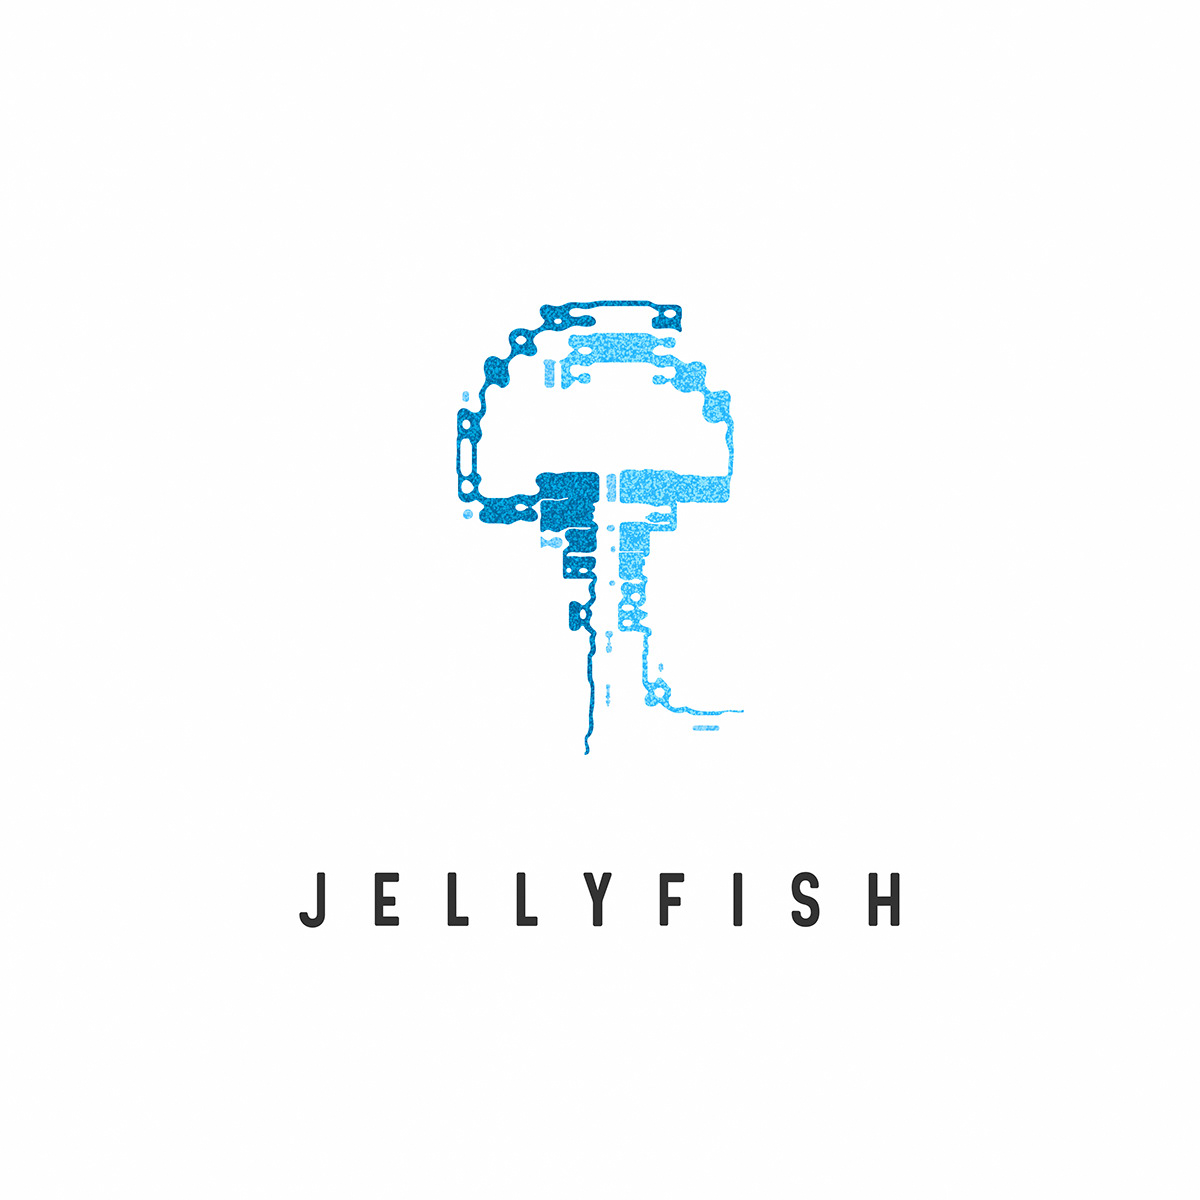 animalslogo AquaticAnimals jellyfish jellyfishlogo LOGOFOLIO2021 logos Turtle turtlelogo